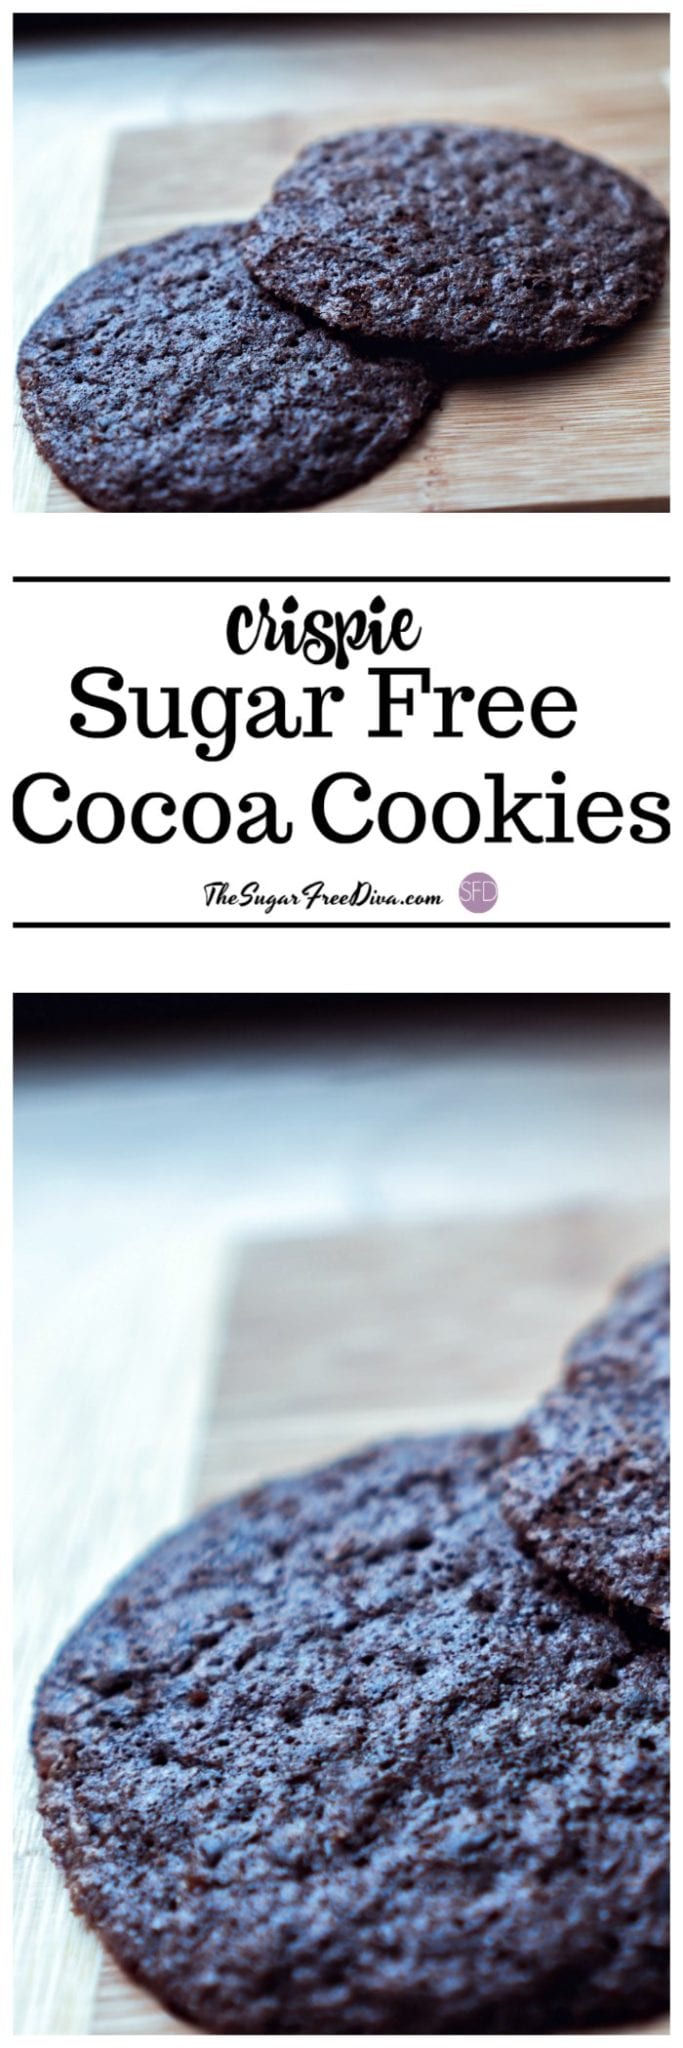 Sugar Free Crispie Cocoa Cookies